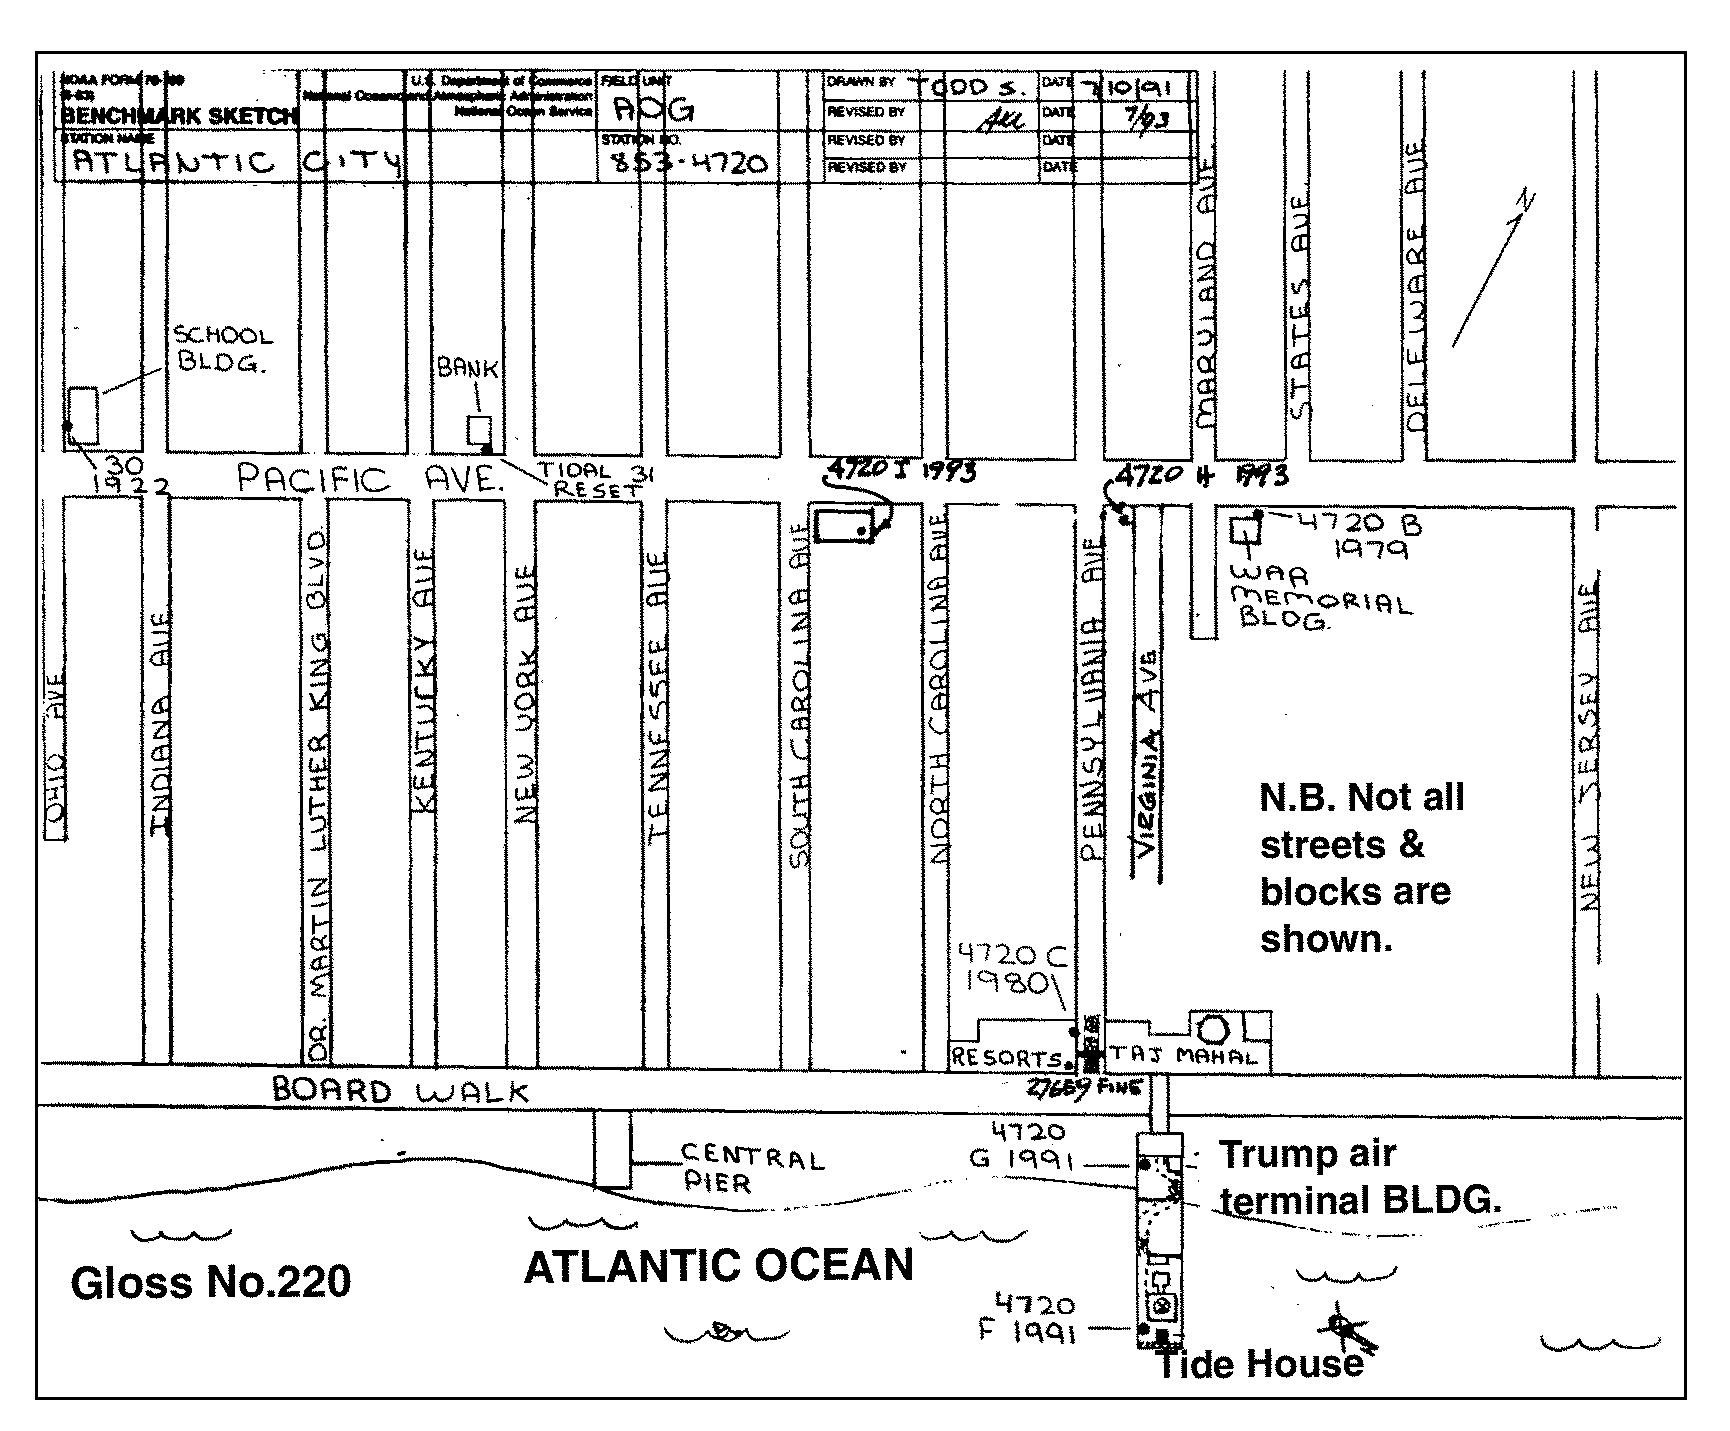 Location map for Atlantic City, NJ, U.S.A.